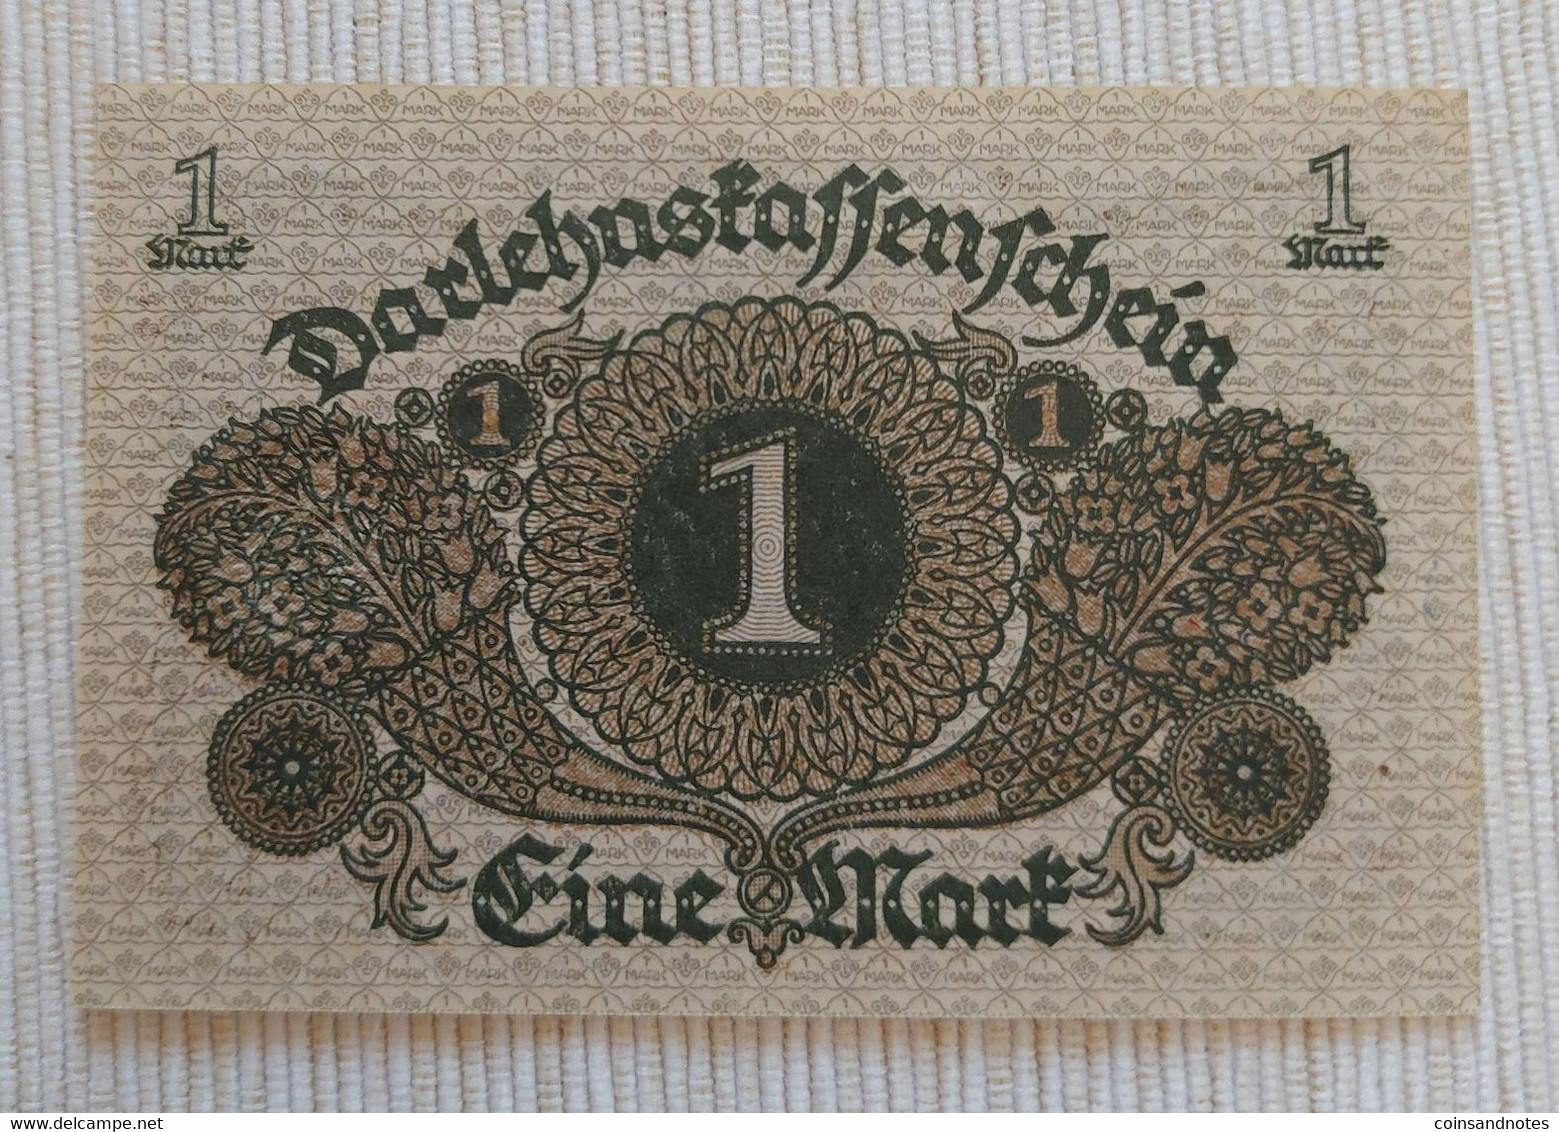 Germany 1920 - 1 Mark - Darlehenskassenschein - Rosenberg 64 - Nr 181.831264 - UNC - 1 Mark